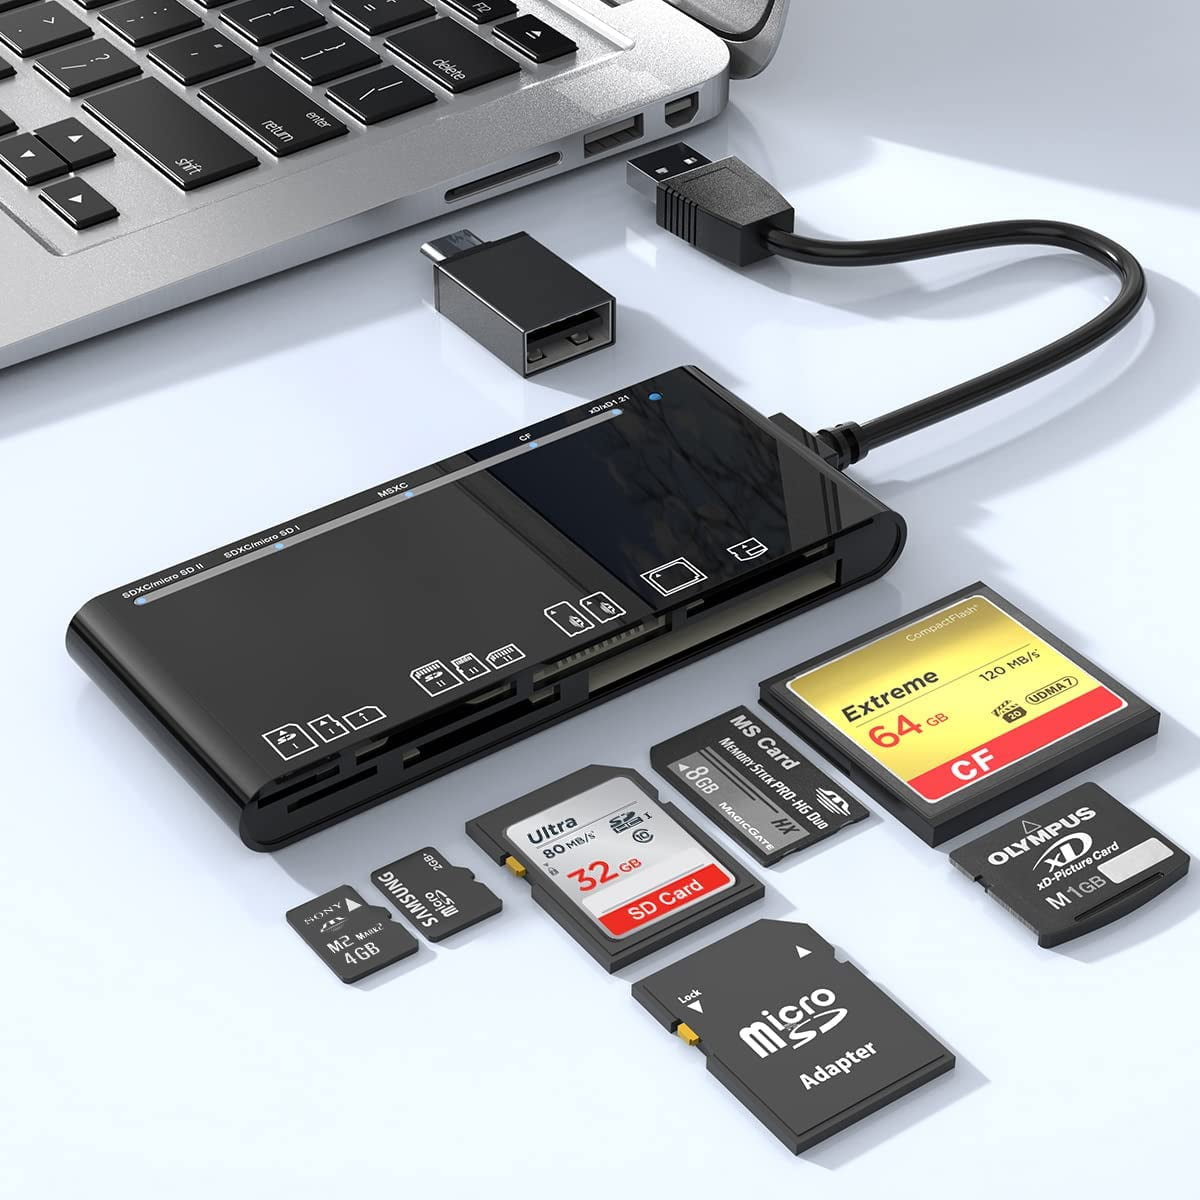 CF SD M2 TF Micro SD Card 5 in 1 Memory Card Adapter Rocketek USB 3.0 Multi-Card Reader Linux for Mac OS,Windows Reader and Writer 5Gbps SD Card Reader 